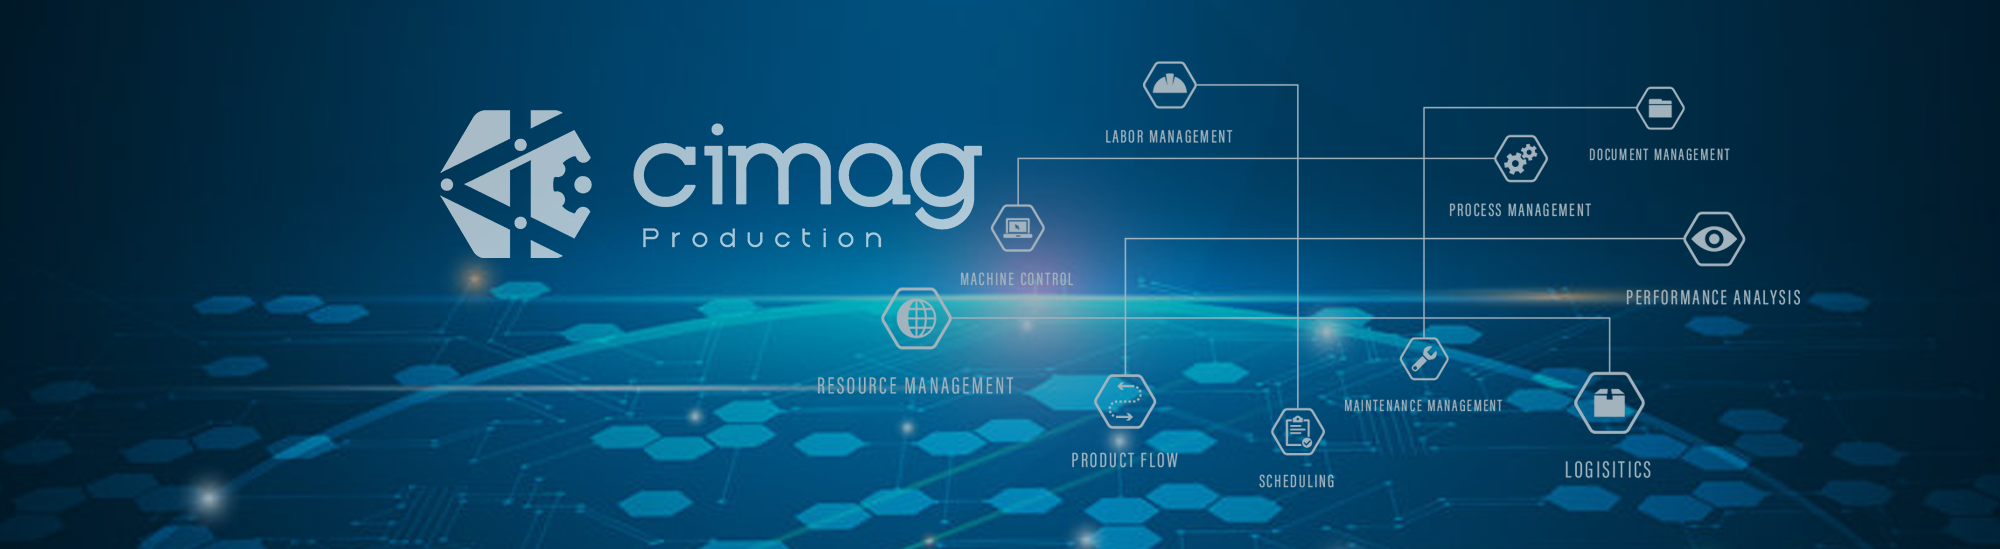 CIMAG Production